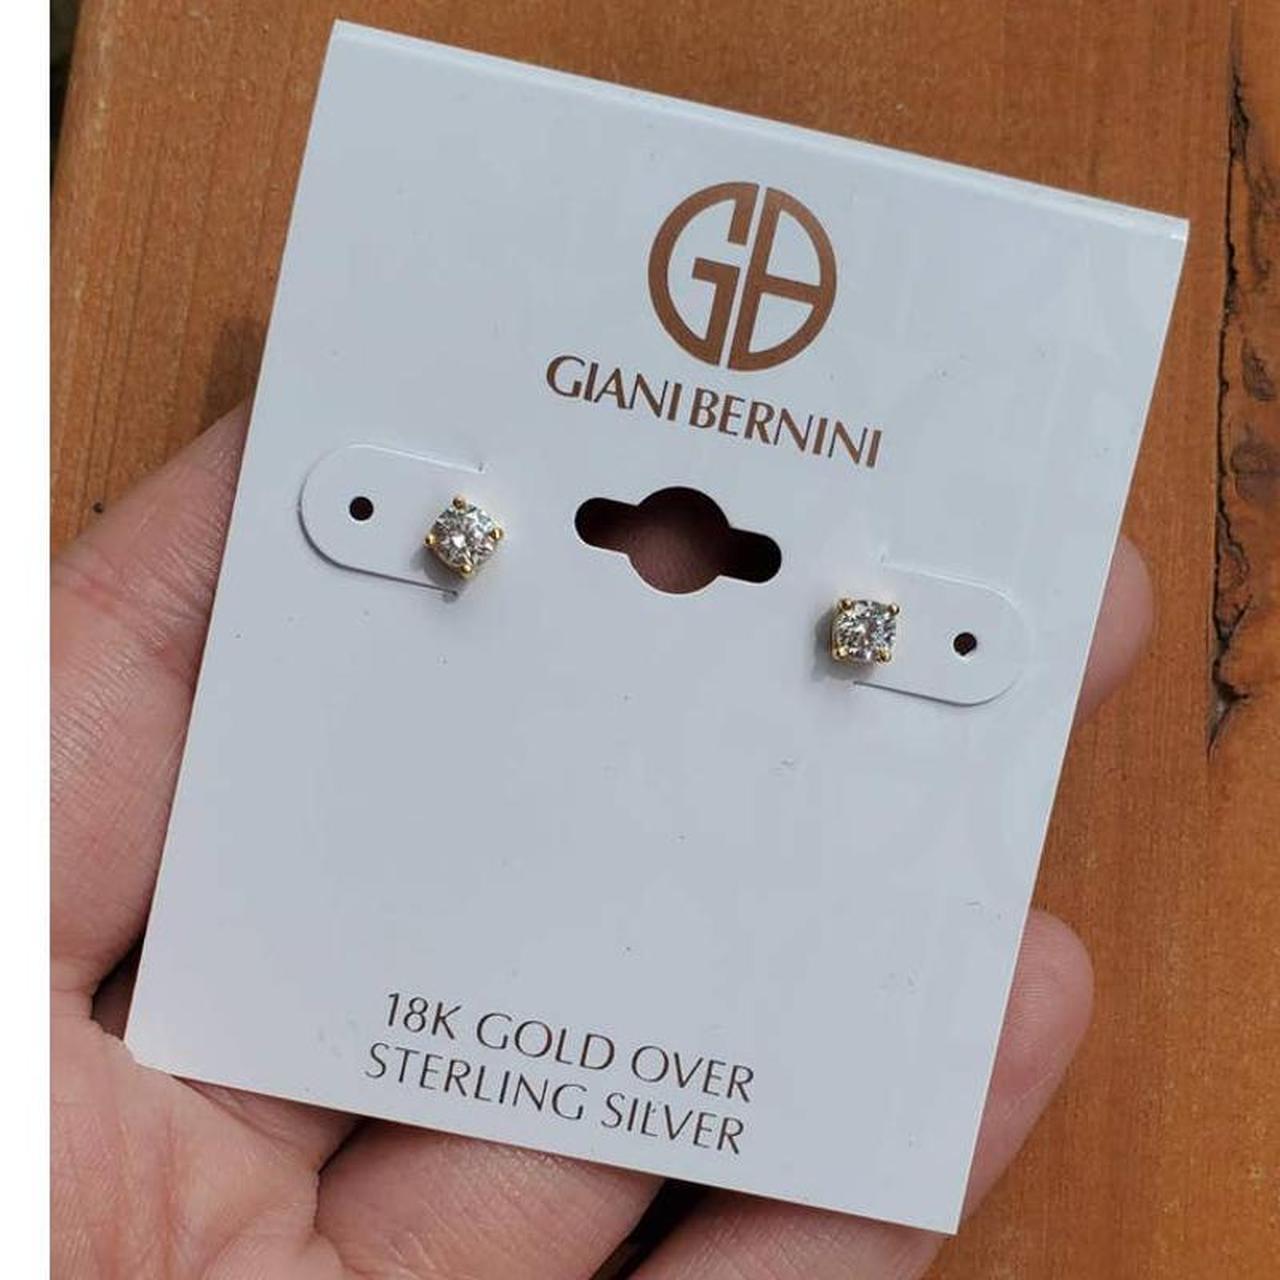 Giani Bernini Earrings Color: Silver toned metal - Depop